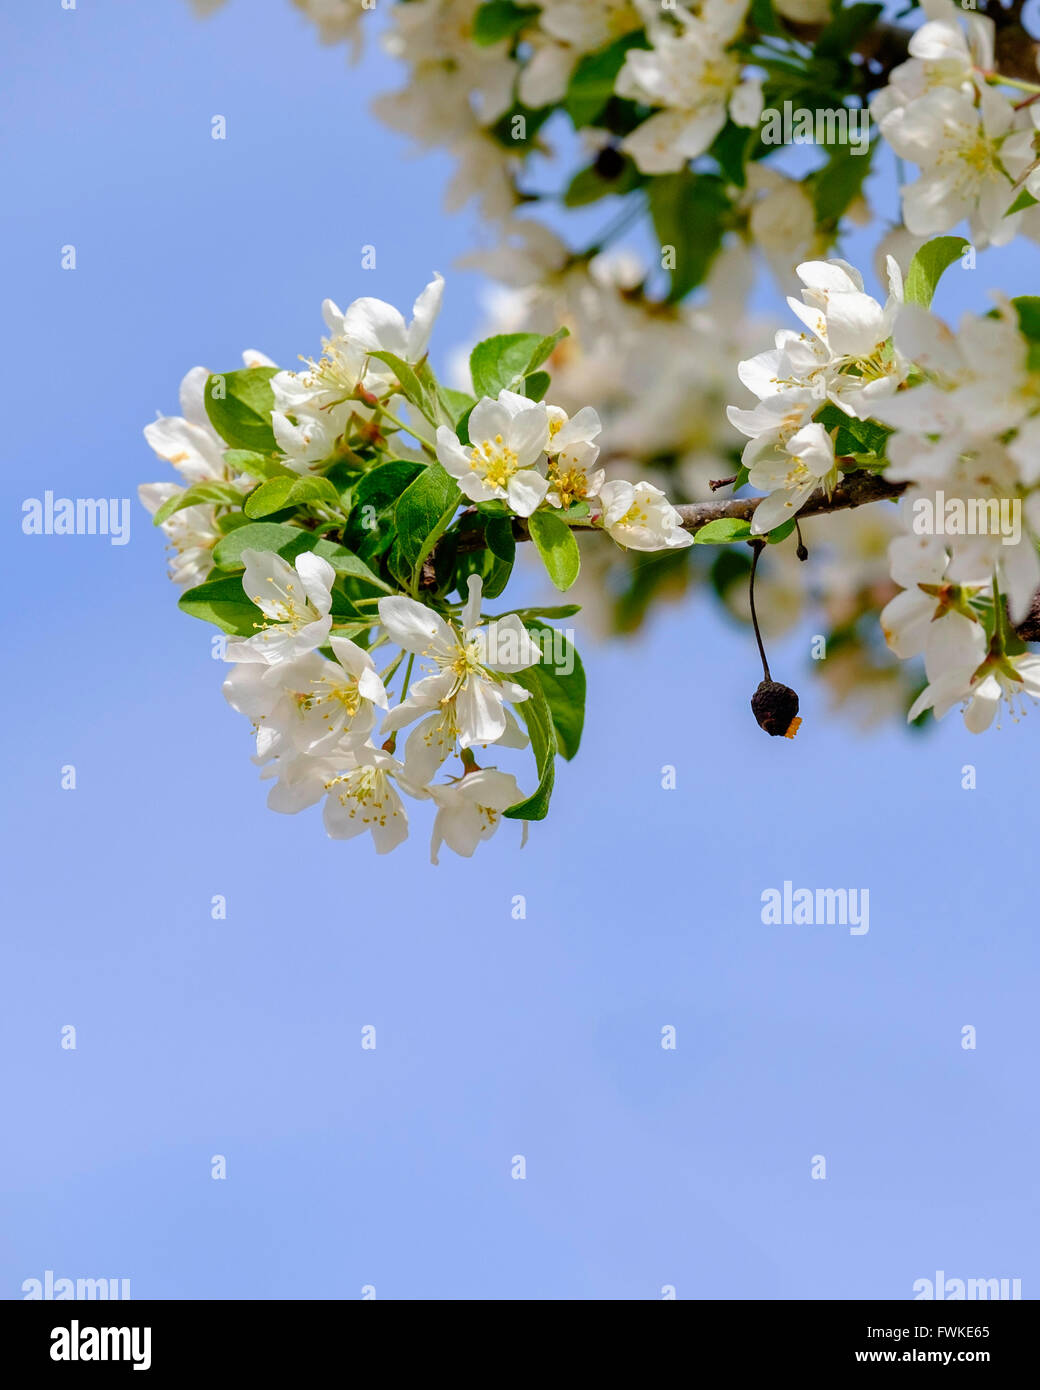 Spring Japanese flowering crabapple blossoms, Malus floribunda, with one old fruit, in Oklahoma, USA. Stock Photo